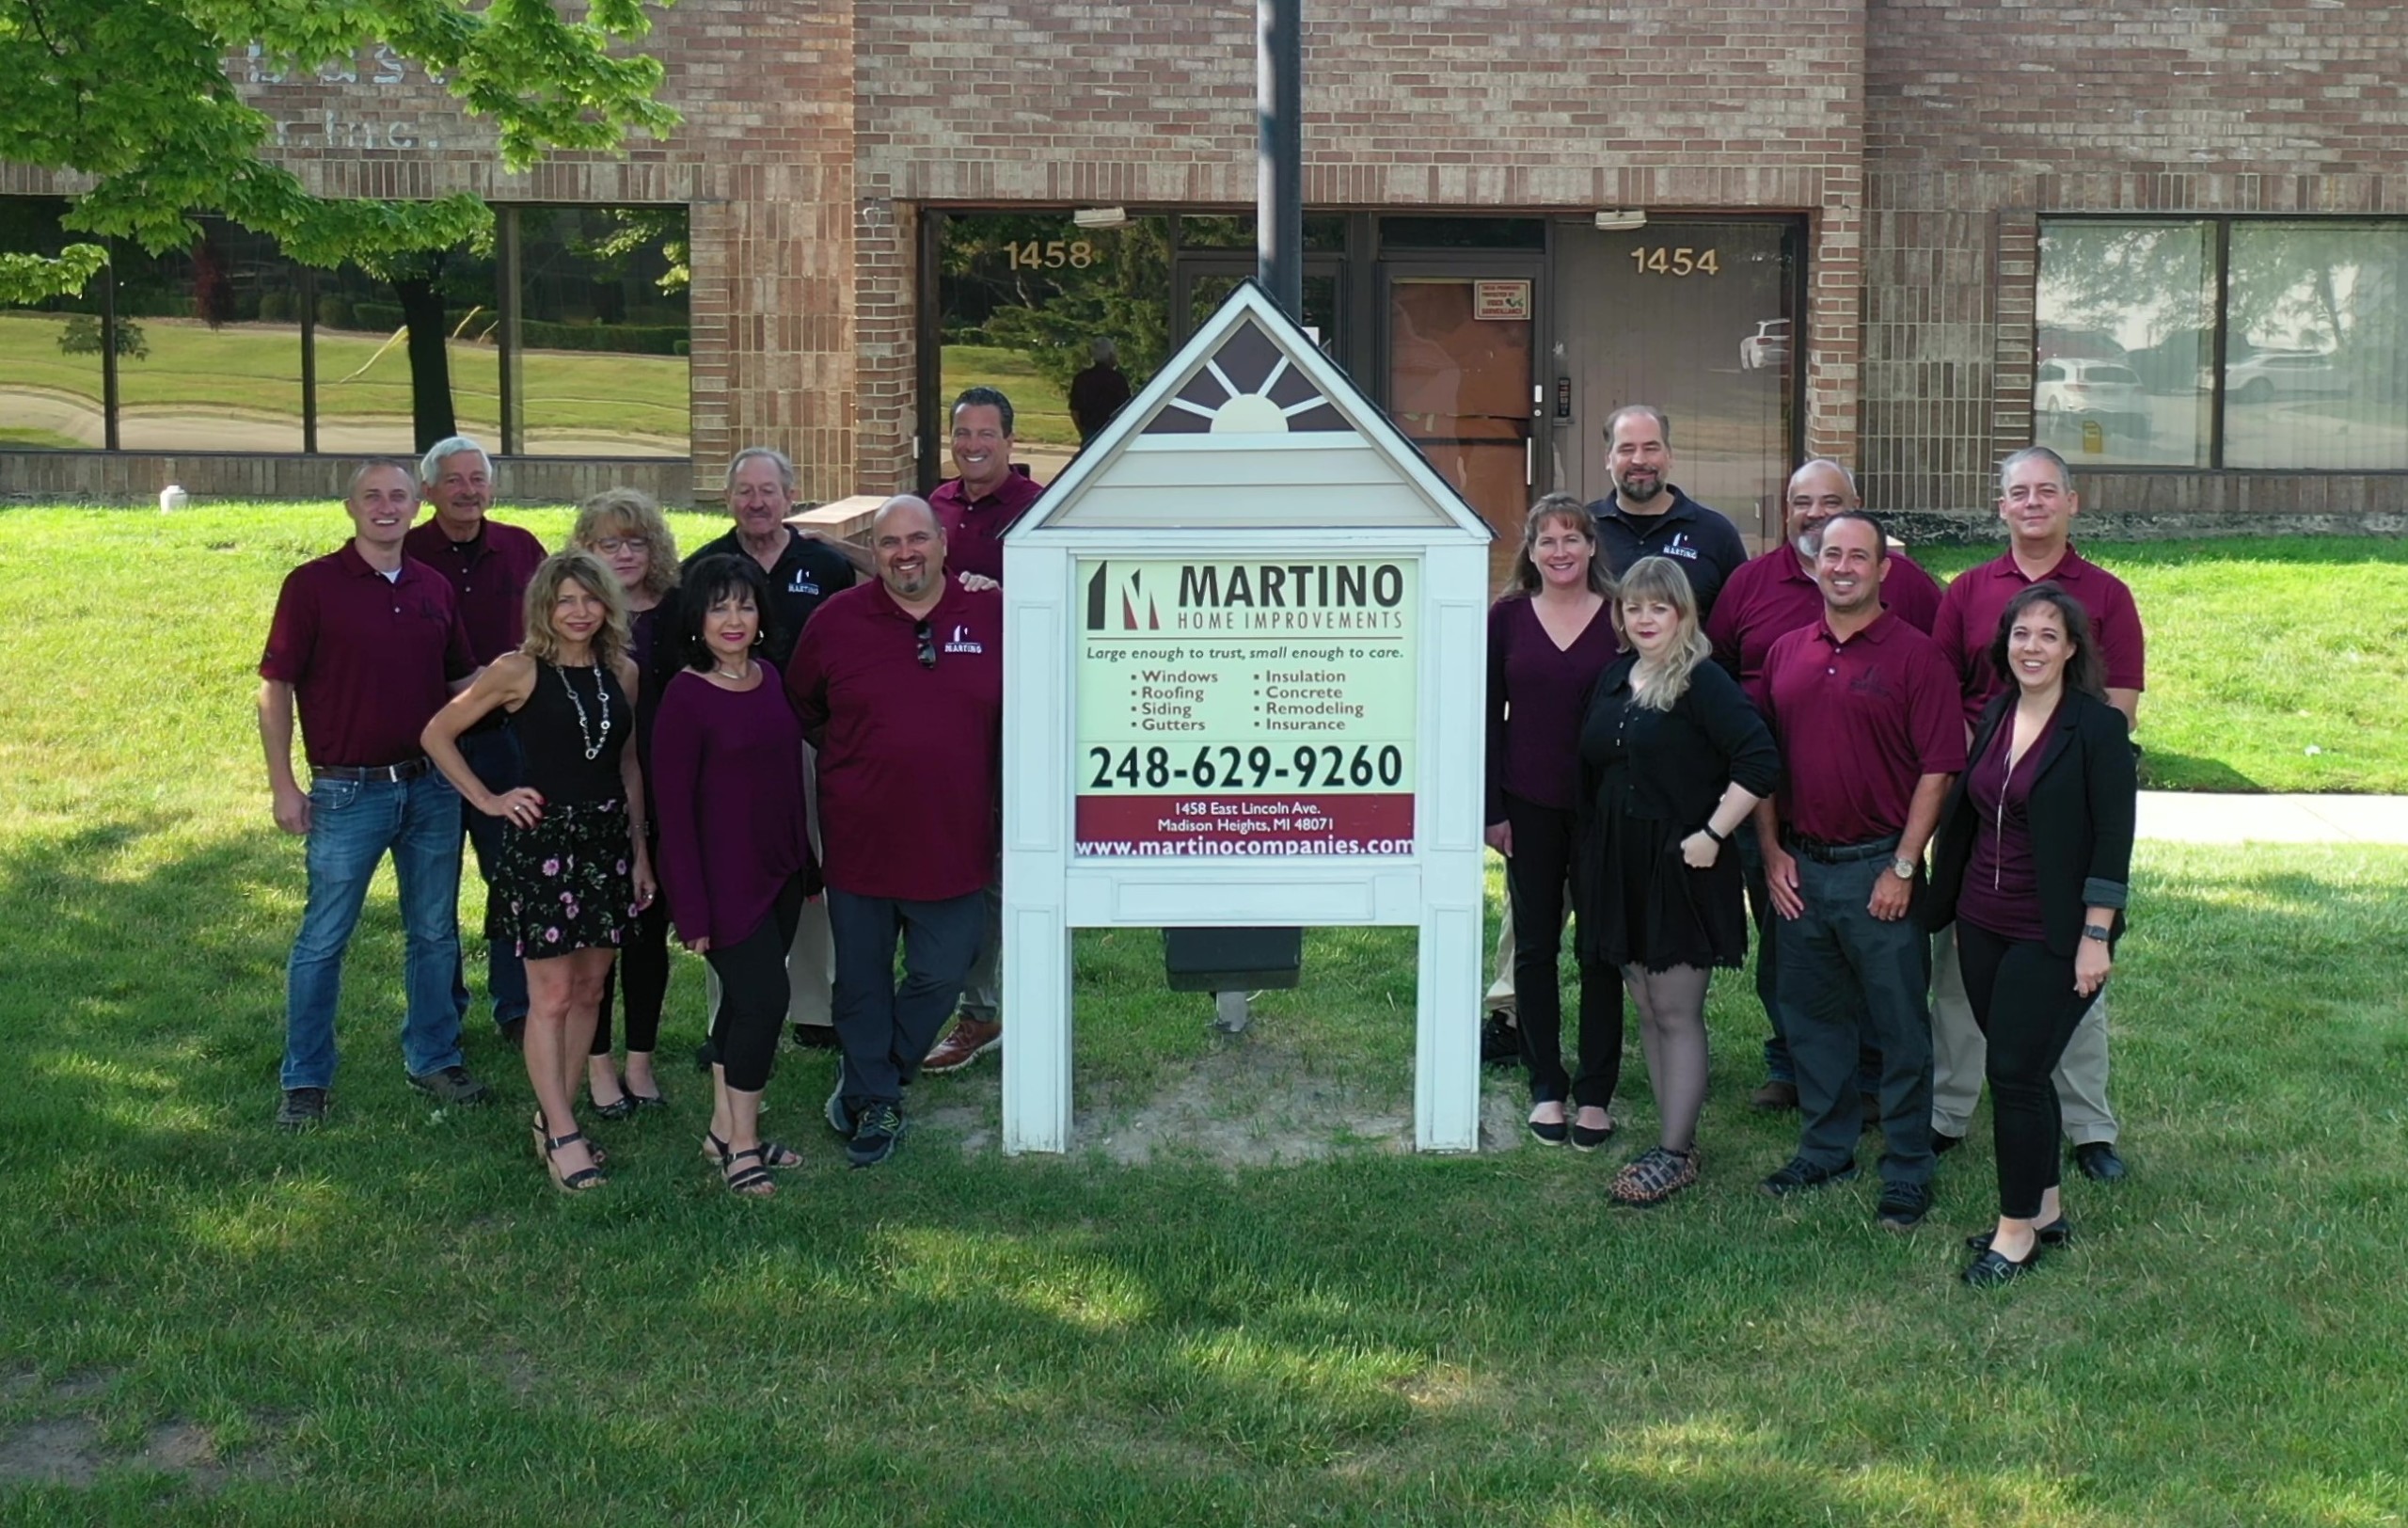 Martino Home Improvements Company Photo Cropped 1 scaled 1